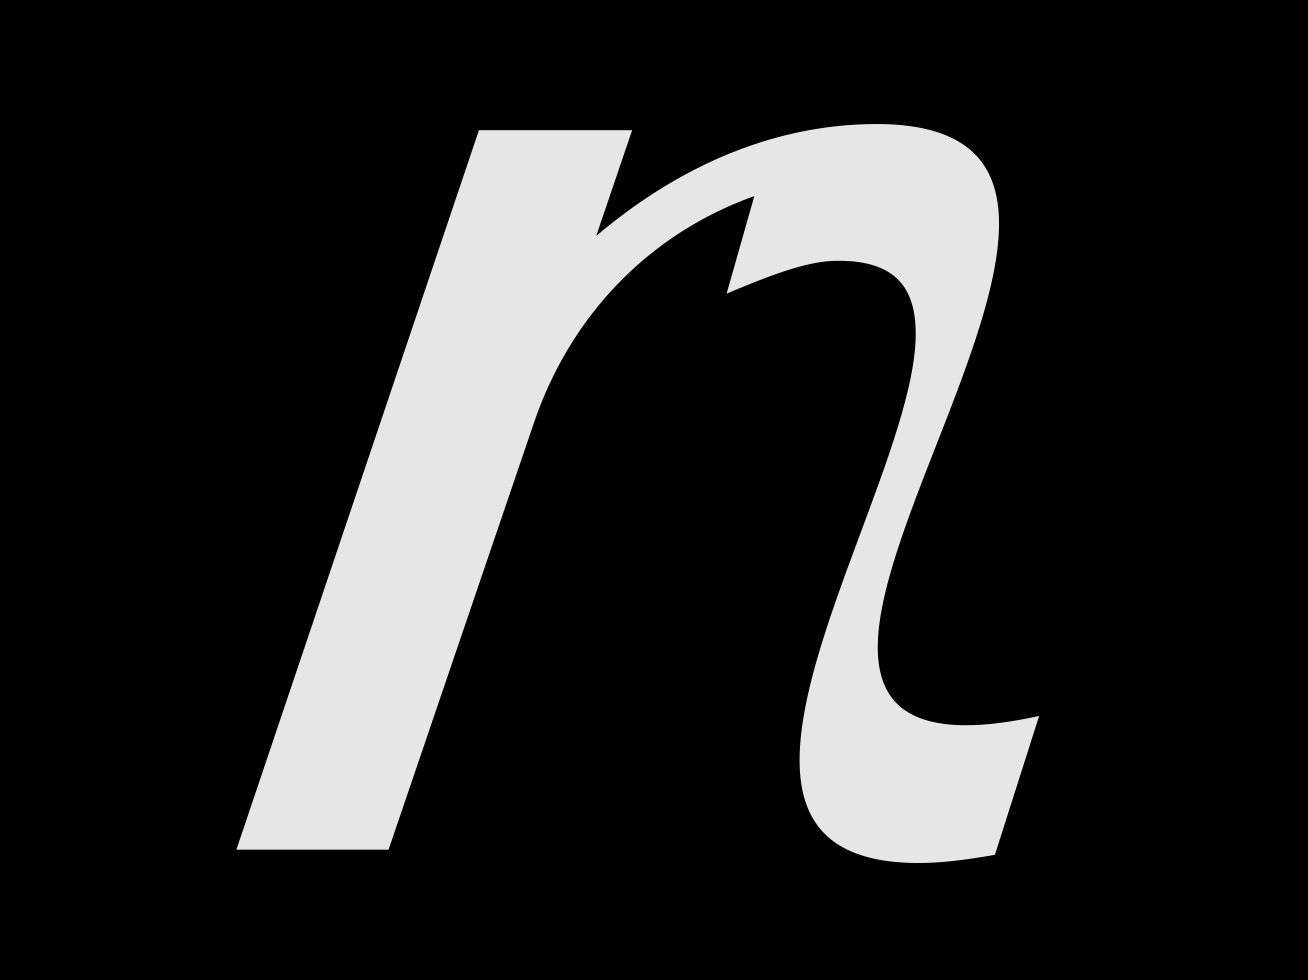 the letter n in black